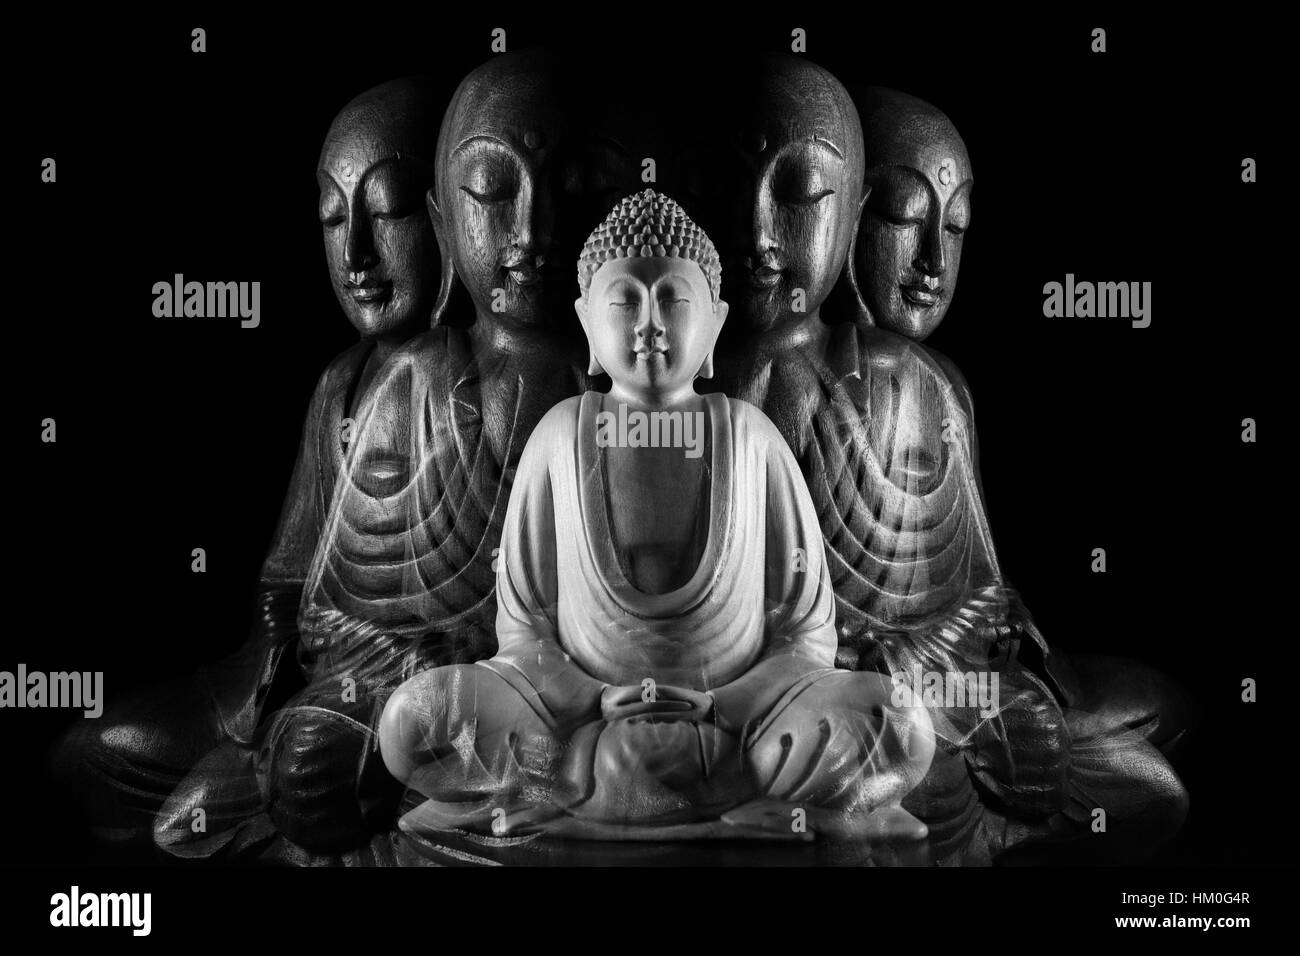 Buddha sculpture 佛/像/佛像 and Ksitigarbha sculpture 地藏王/菩薩/地藏王菩薩/地藏菩薩/像 Stock Photo